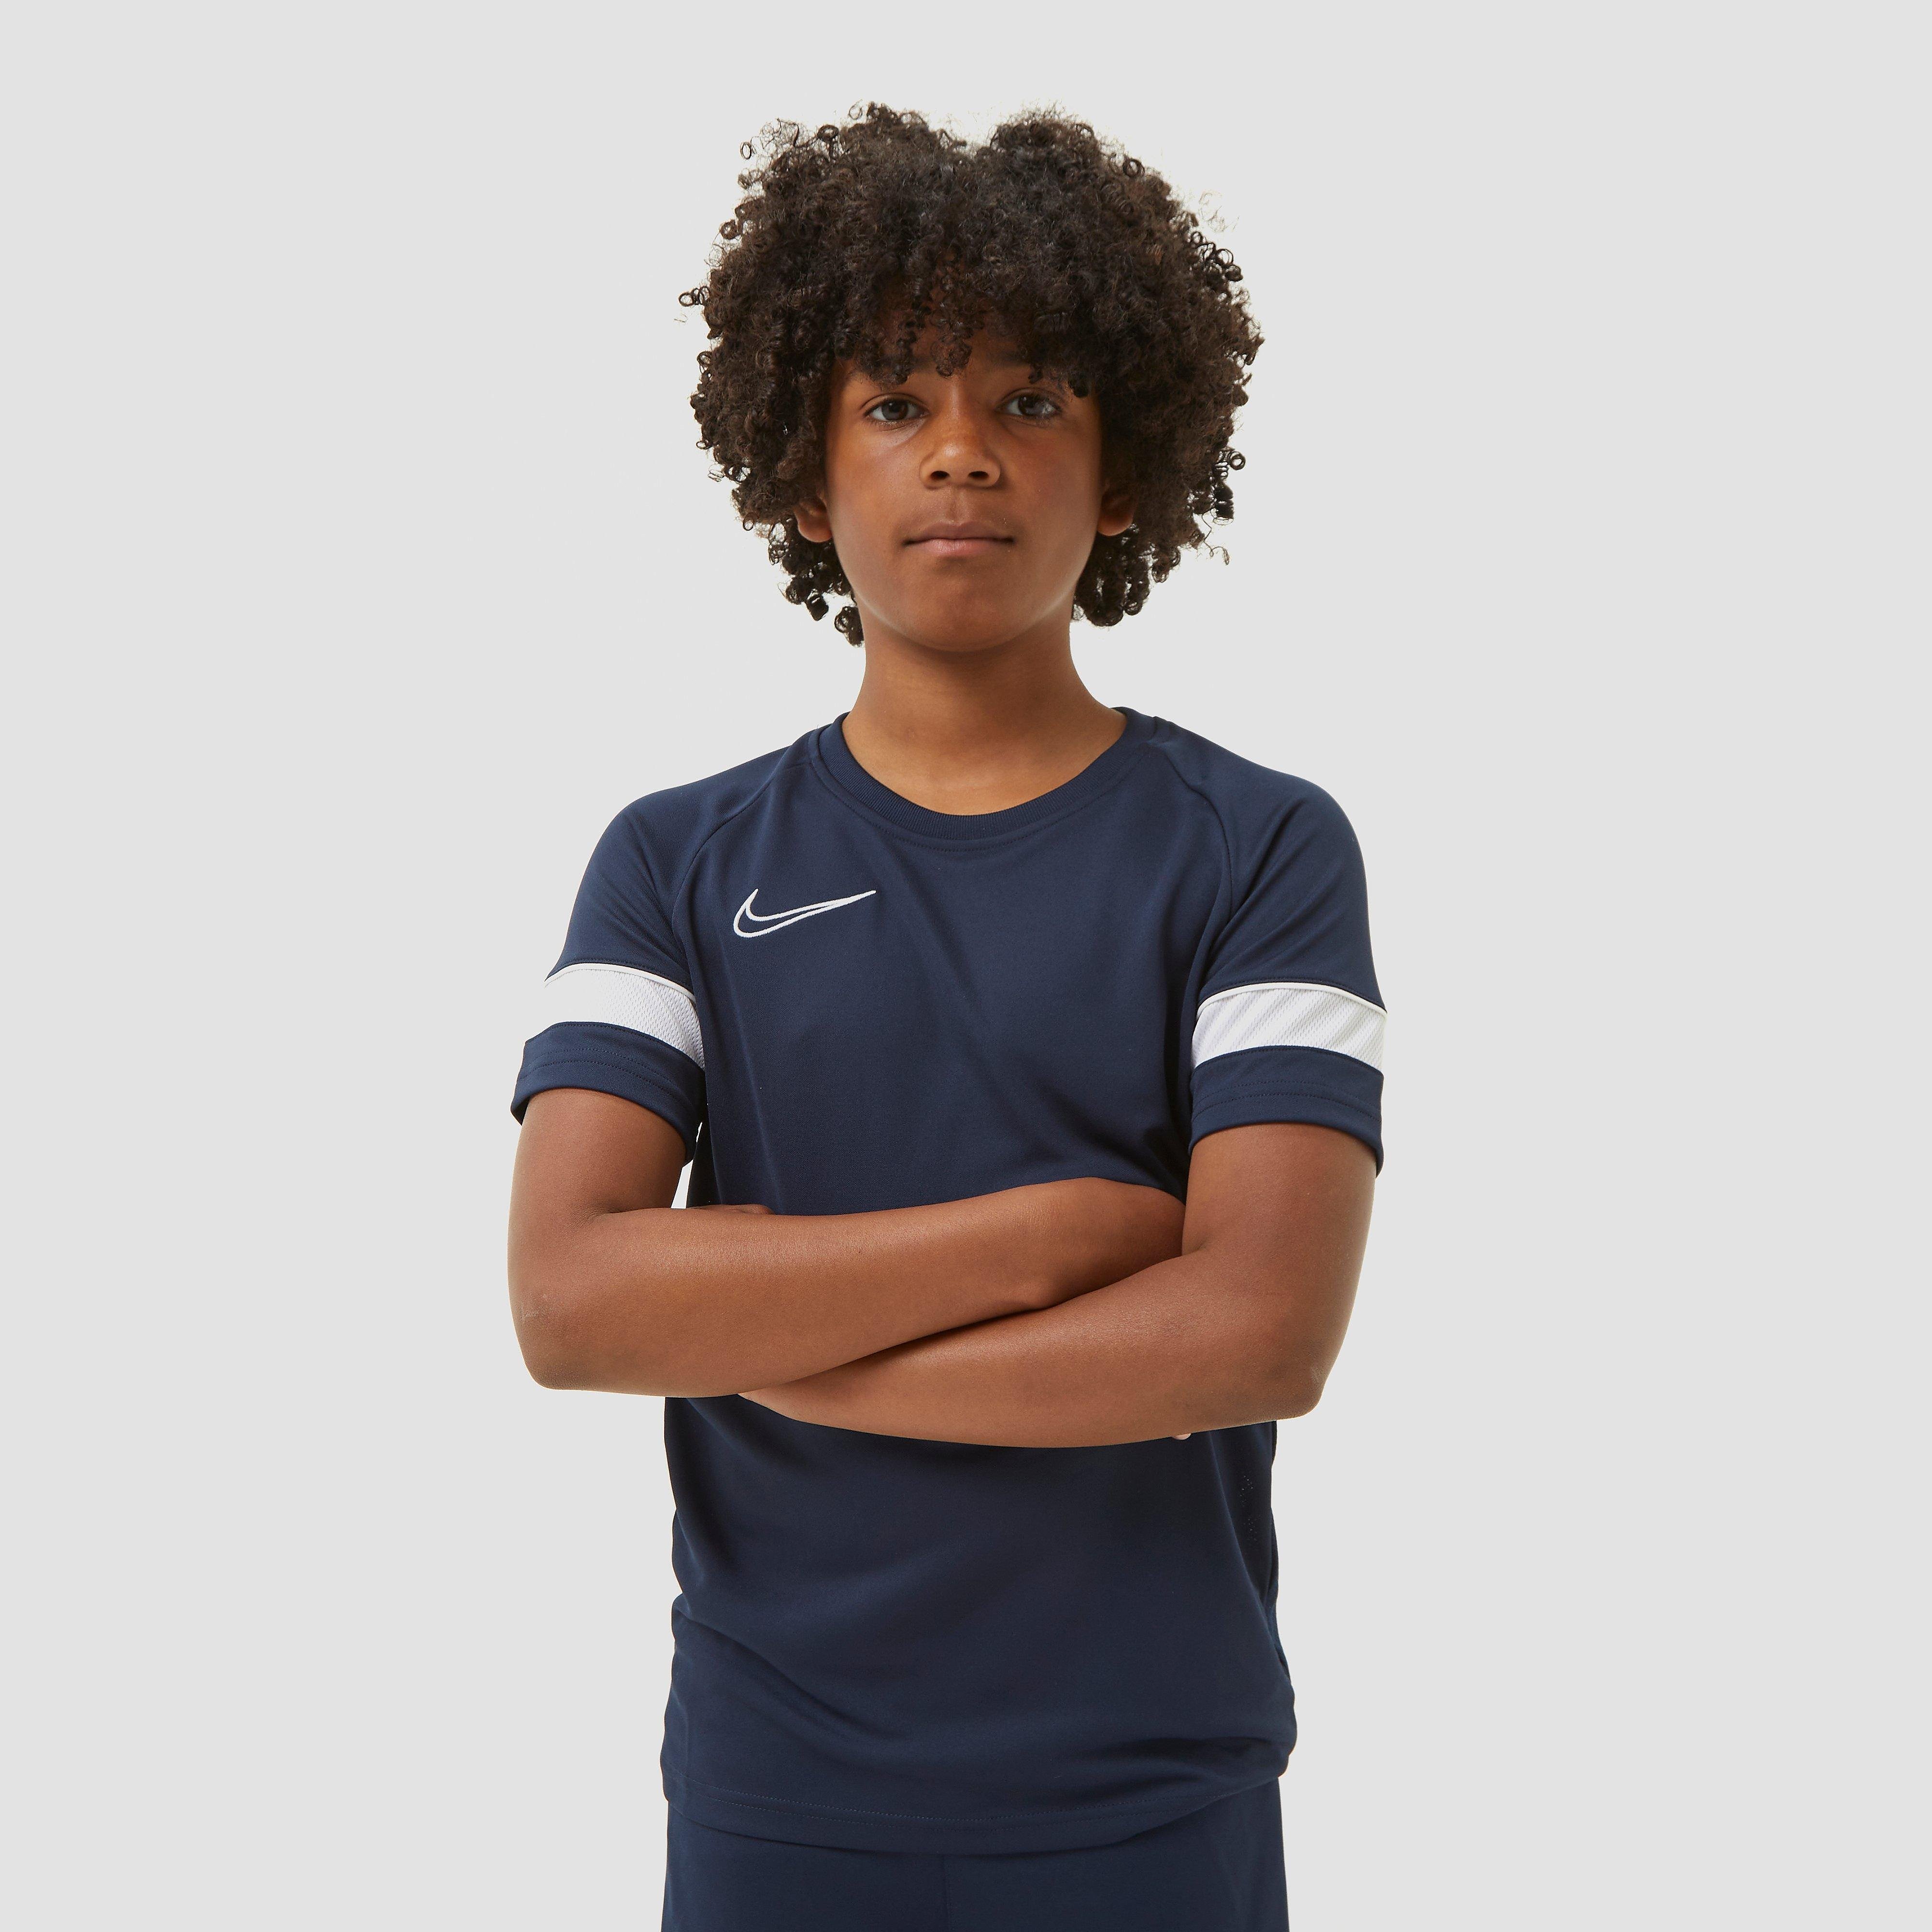 Nike Nike dri-fit academy voetbalshirt blauw kinderen kinderen